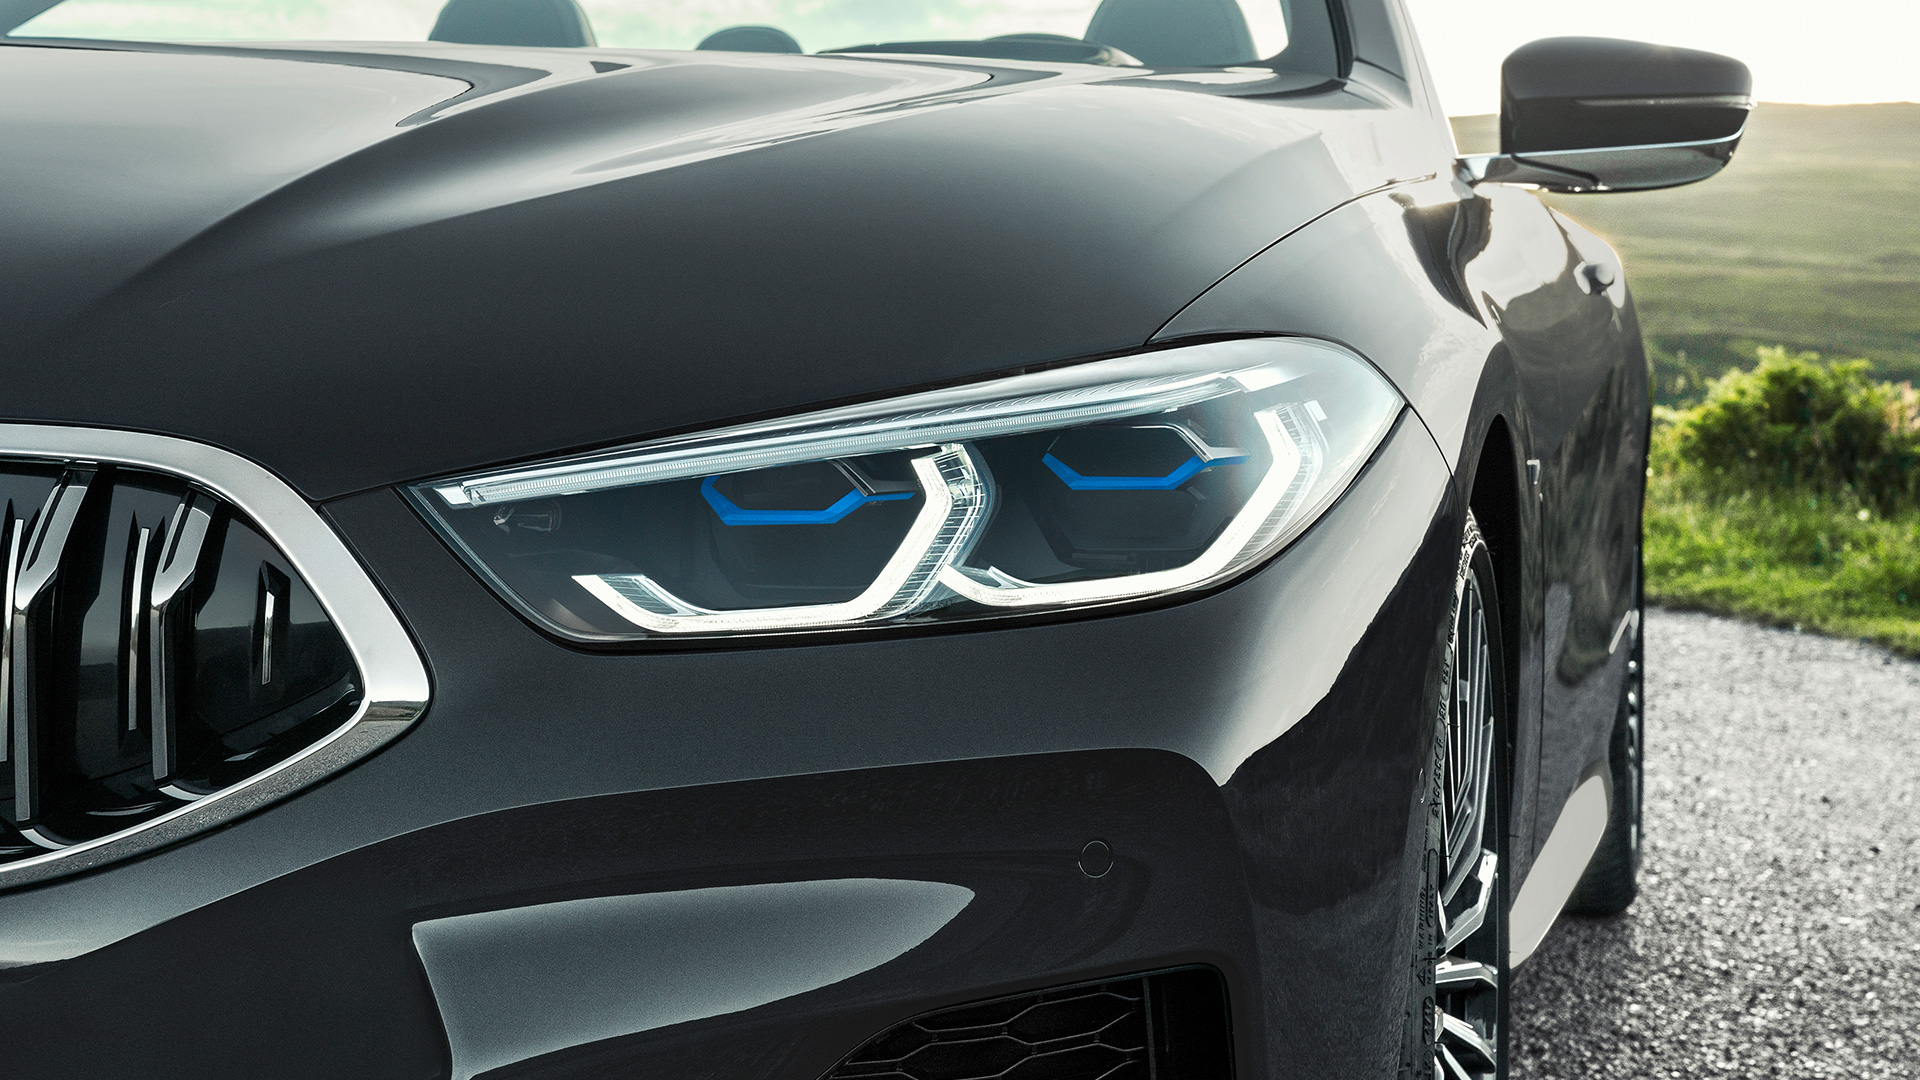 BMW 8 series convertible 2019 M850i Exterior